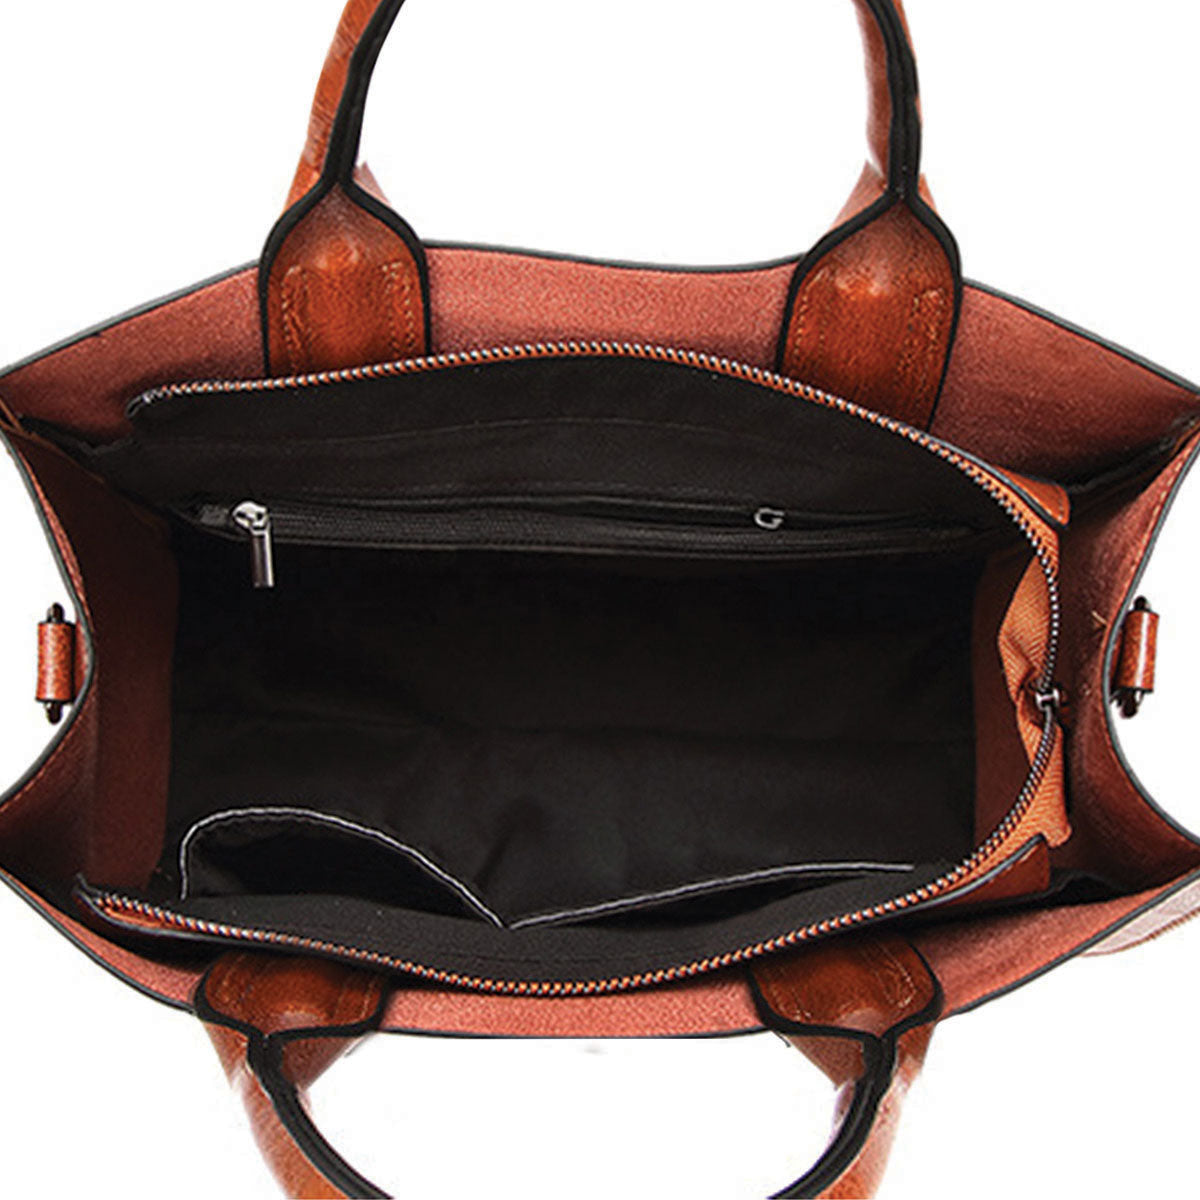 Your Best Companion - Weimaraner Luxury Handbag V1